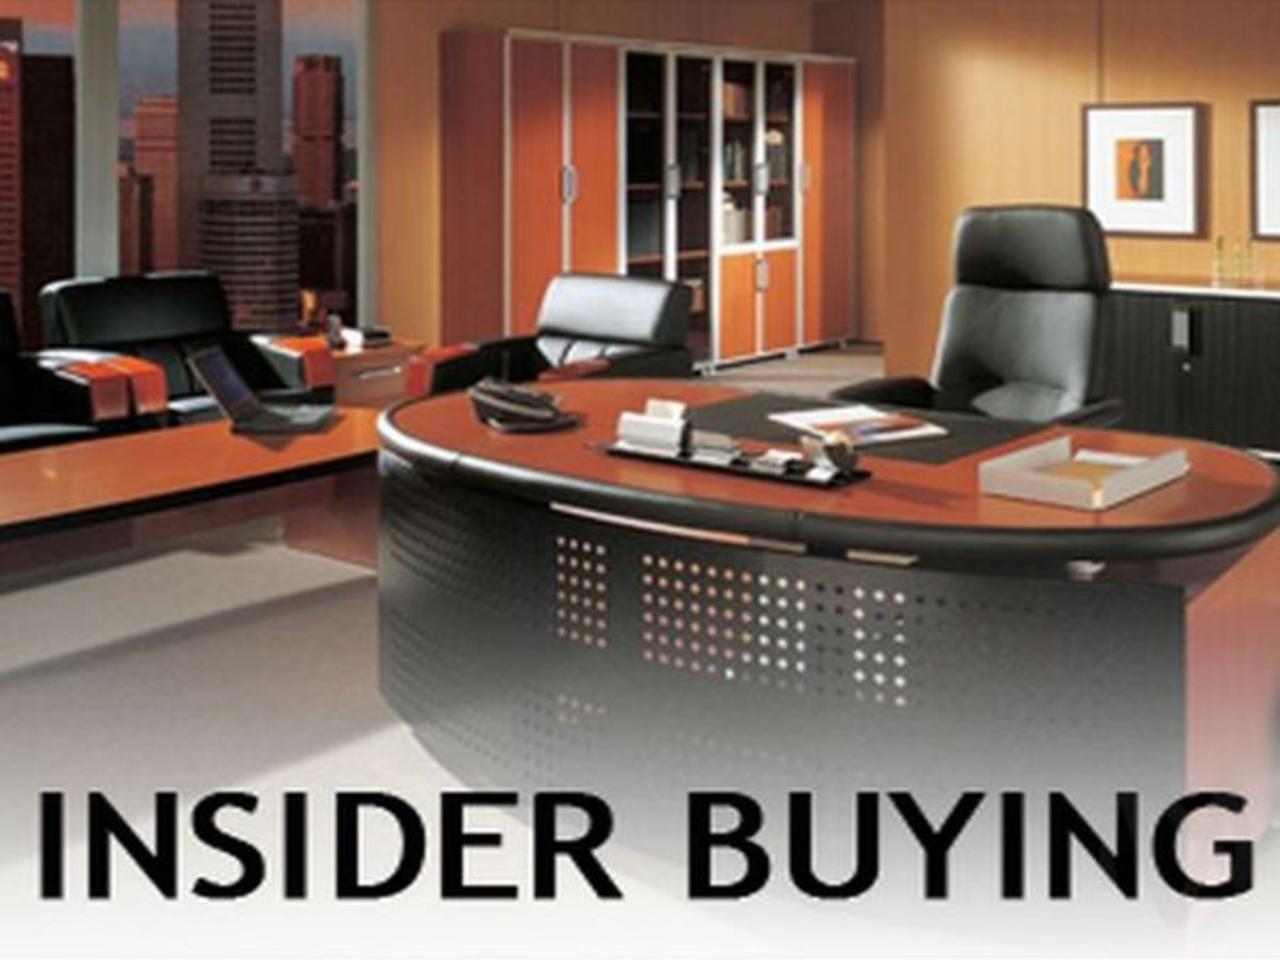 Wednesday 12/1 Insider Buying Report: TMDX, THG